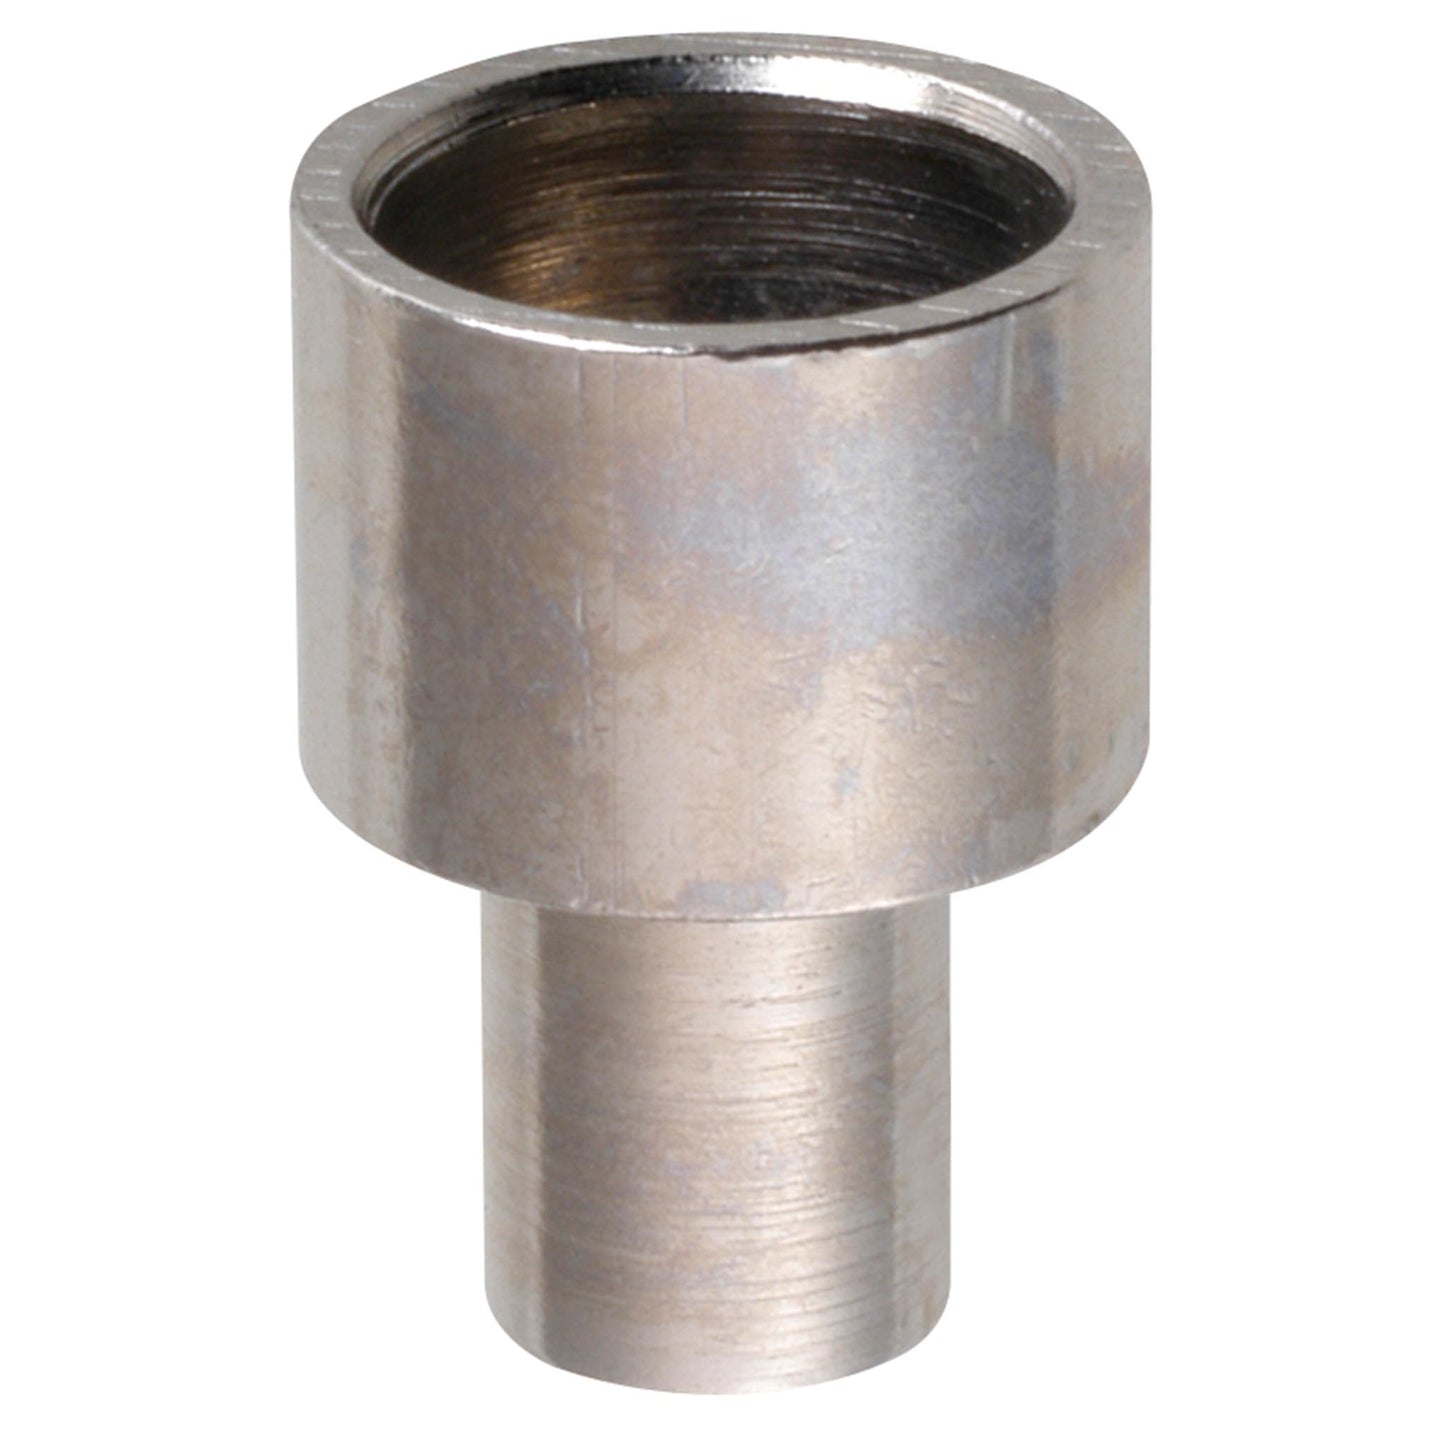 Sleeve through hole Ø 2.0 mm nickel-plated brass